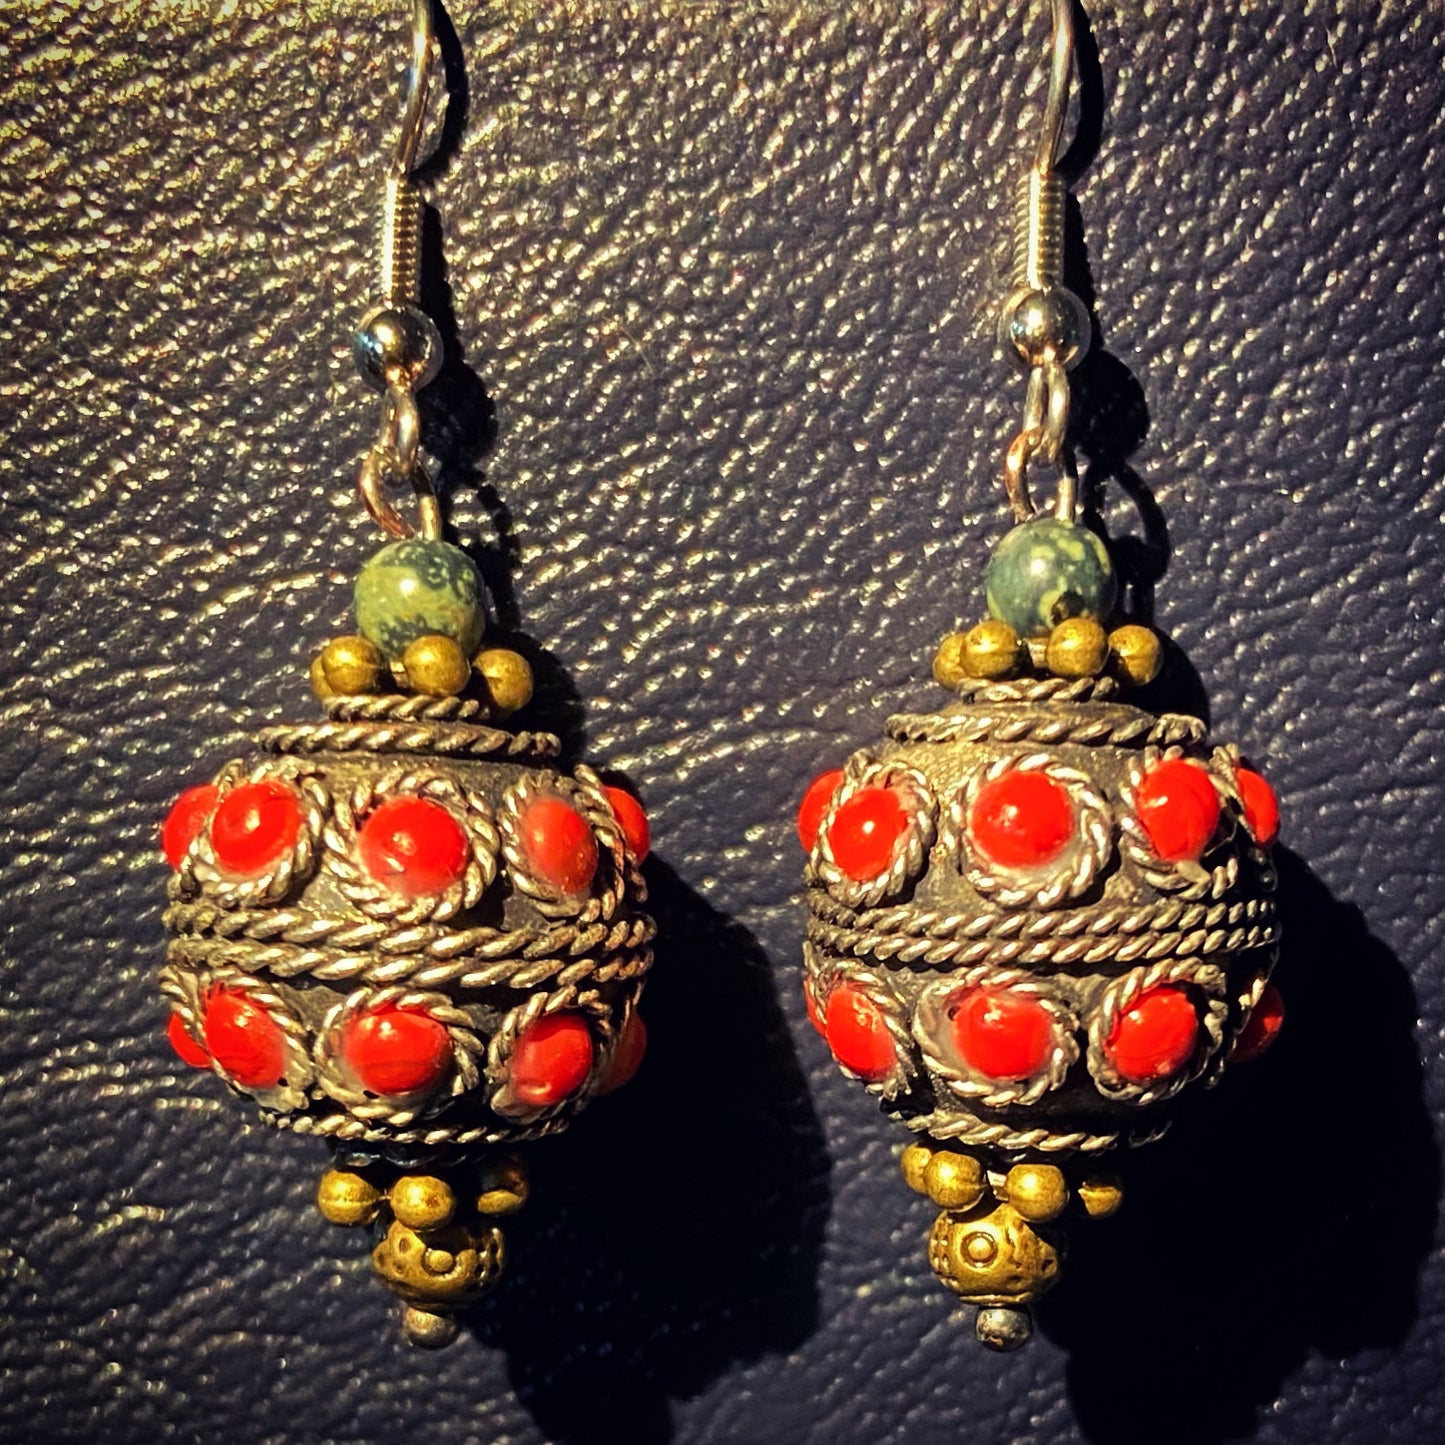 Beijo Earrings 2: Tibetan Handmade Beads, Jade & Metal Beads. Stainless Steel French Hooks